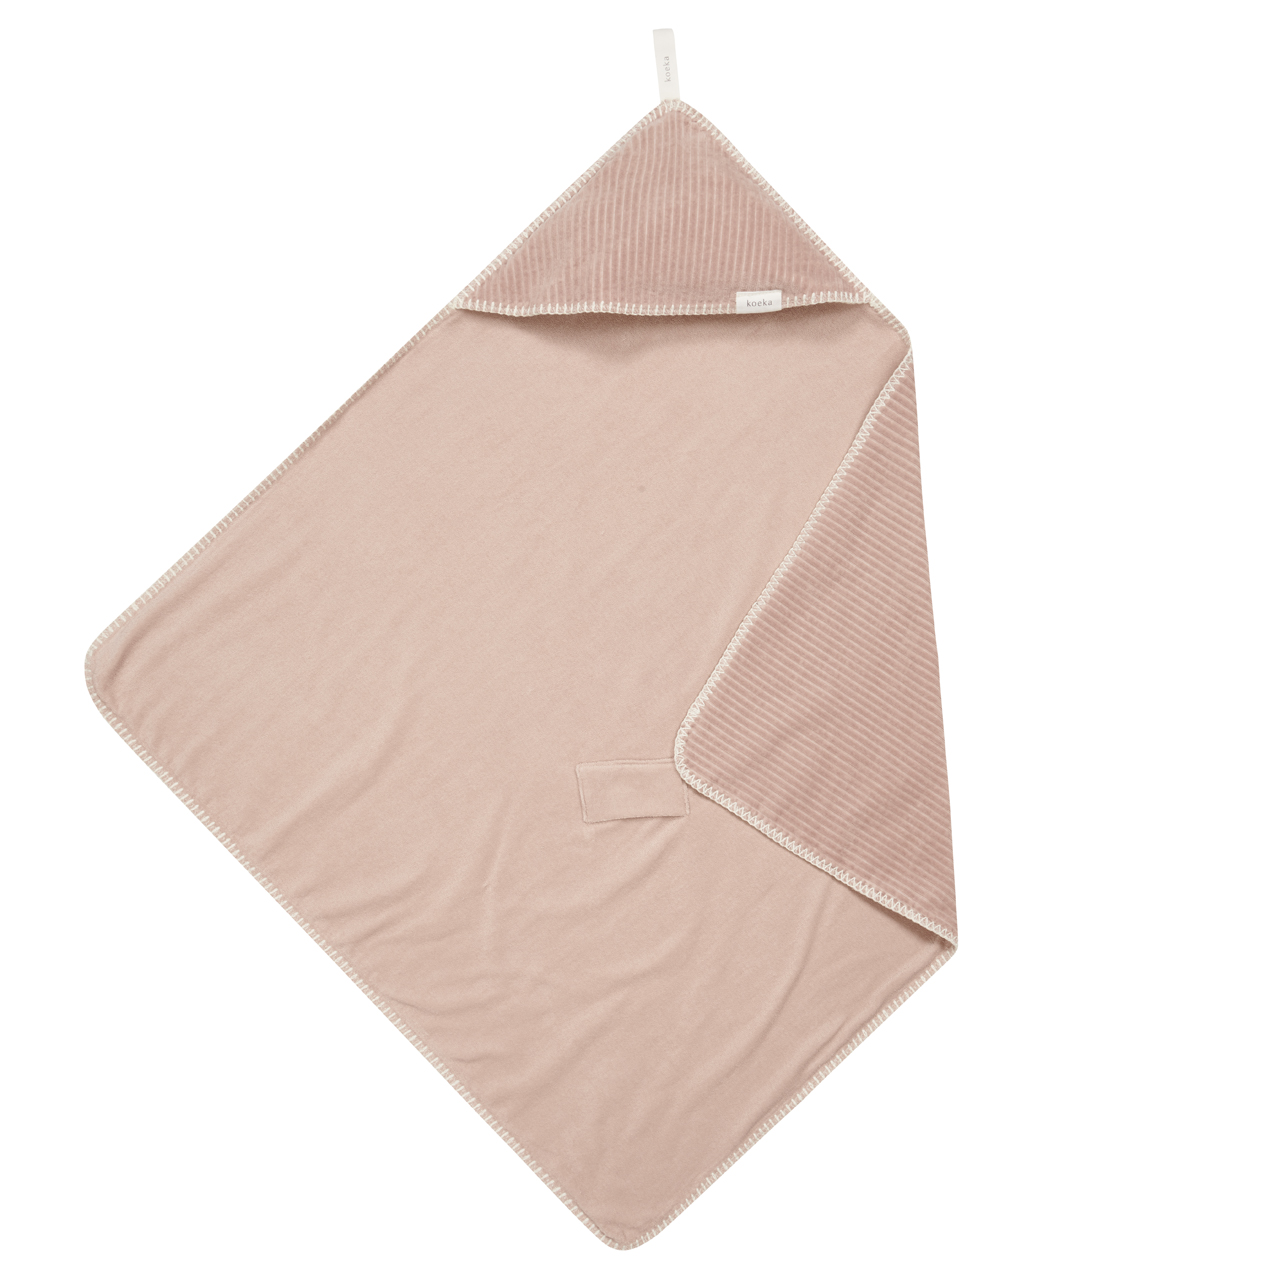 Wrap towel stretch terry Vik grey pink